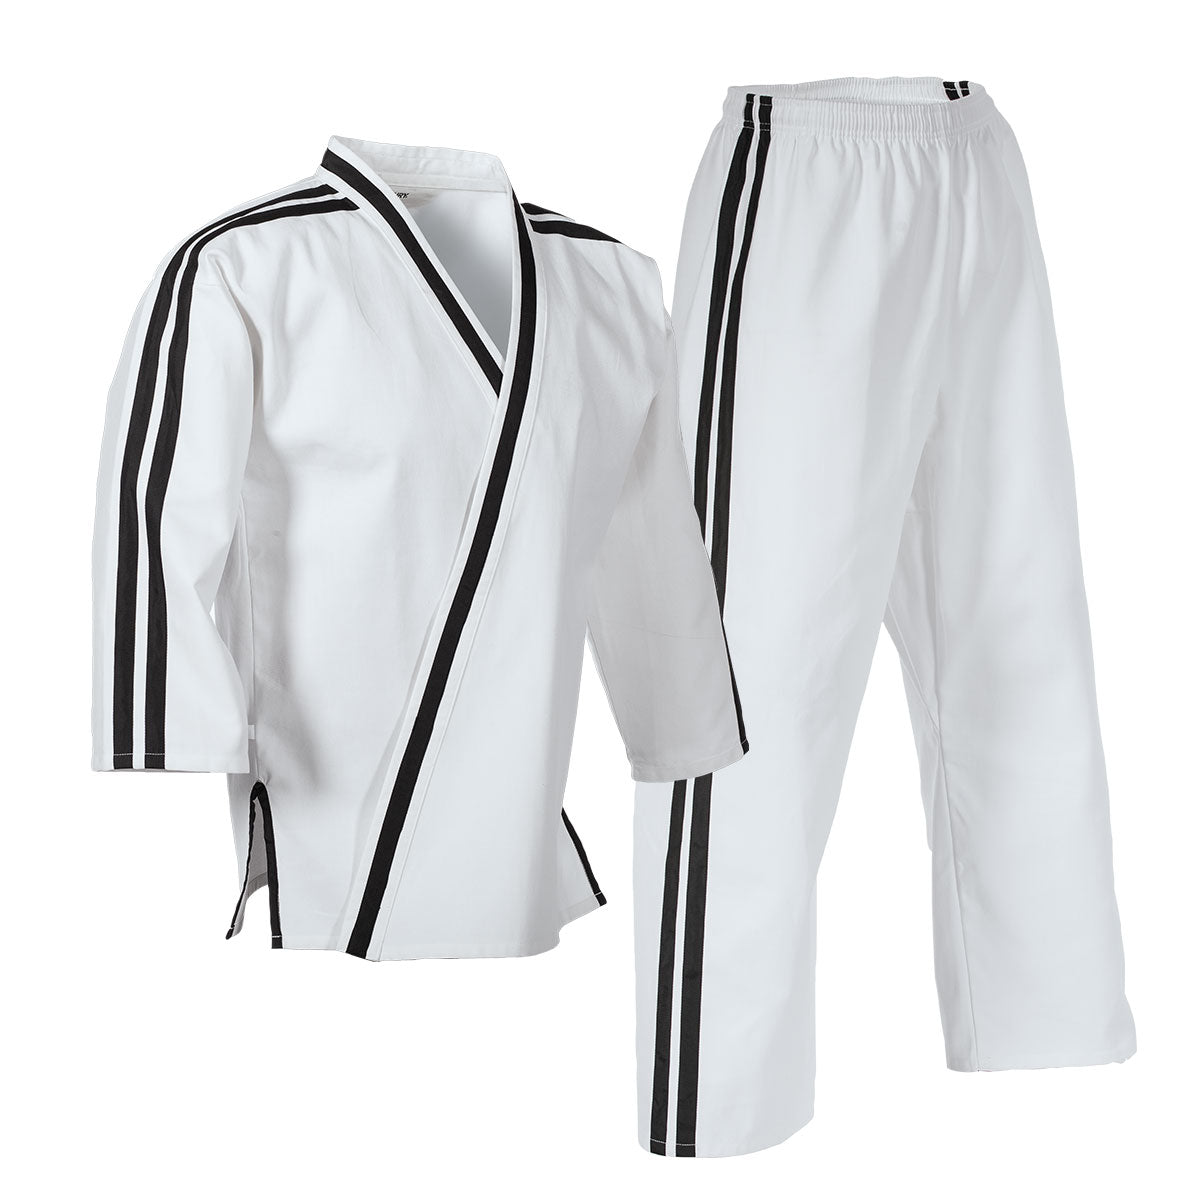 7 oz. Crossover Program Uniform - Level 2 7 White/Black